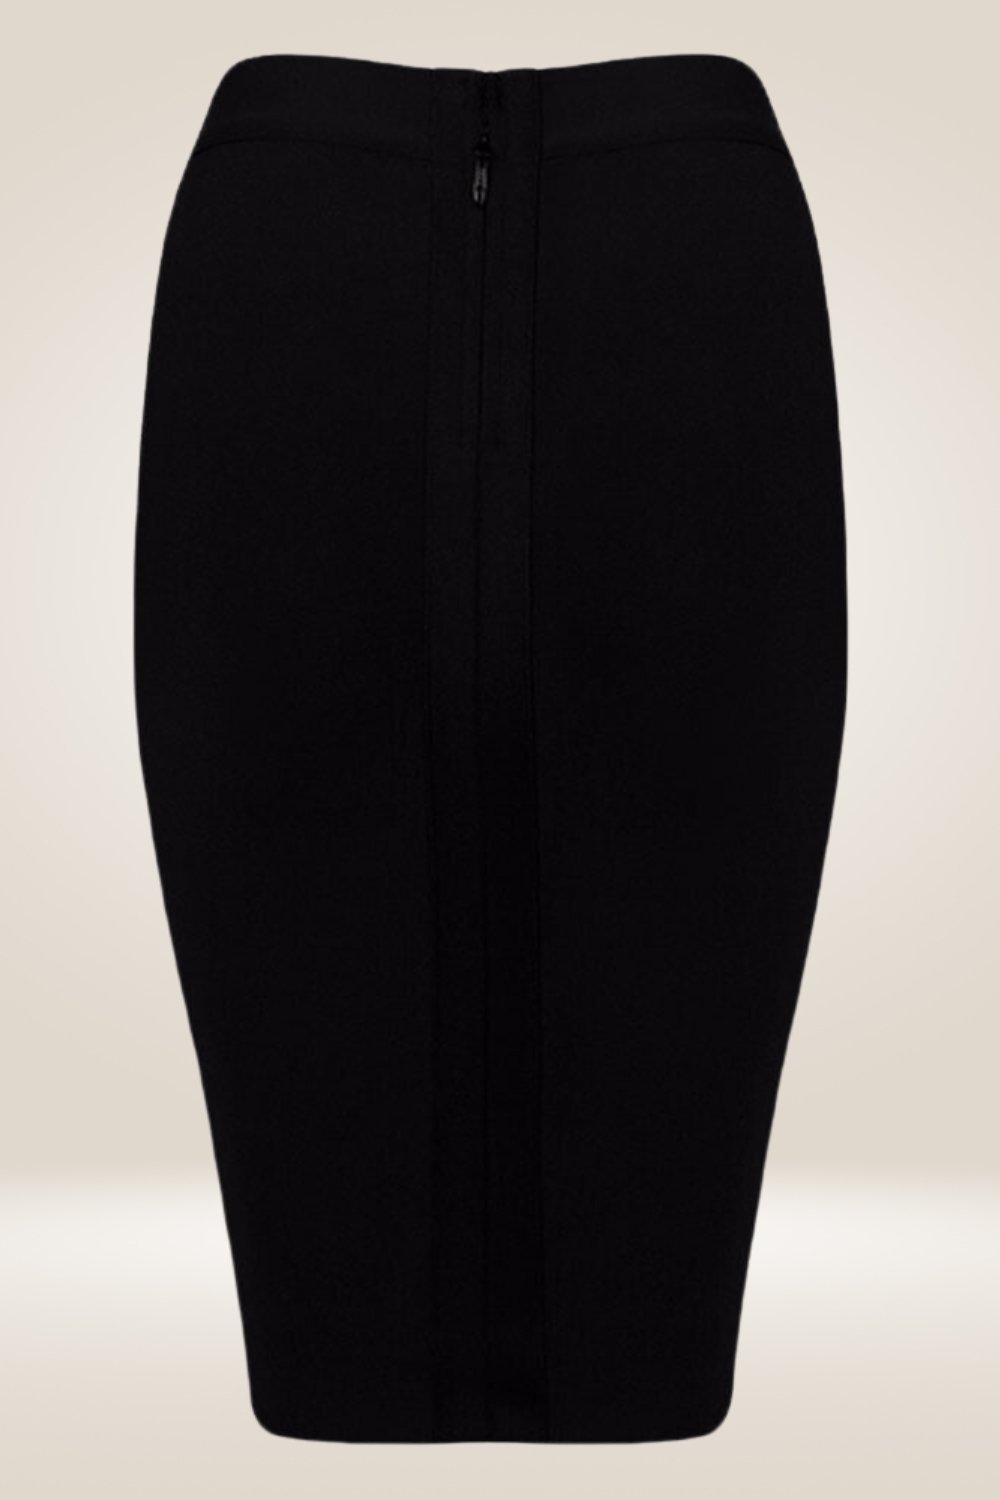 High Waisted Black Pencil Midi Skirt - TGC Boutique - Skirt